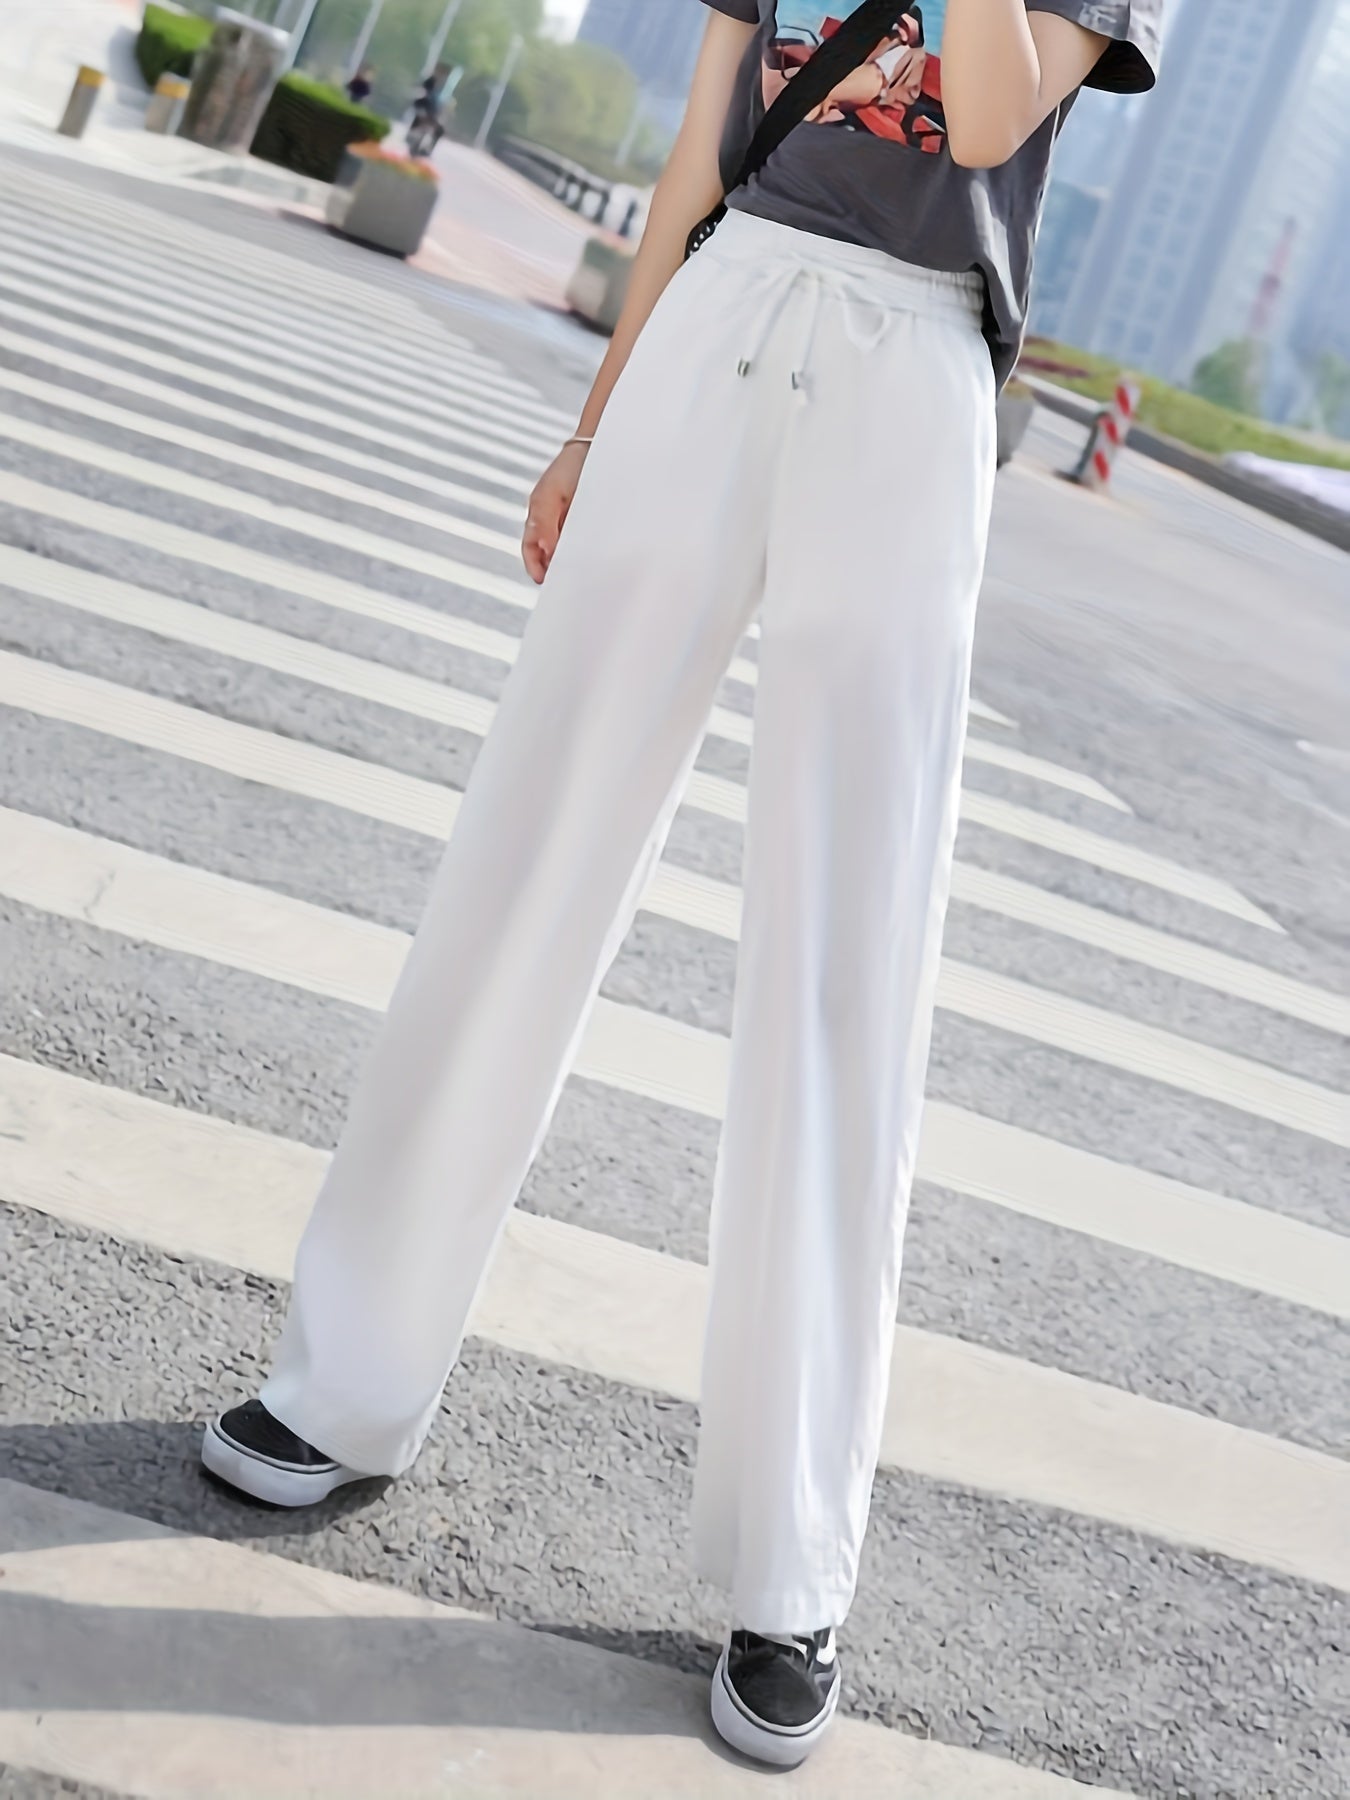 「lovevop」Minimalist Solid Drawstring Pants, Casual Long Length Elastic Waist Wide Leg Pants, Women's Clothing